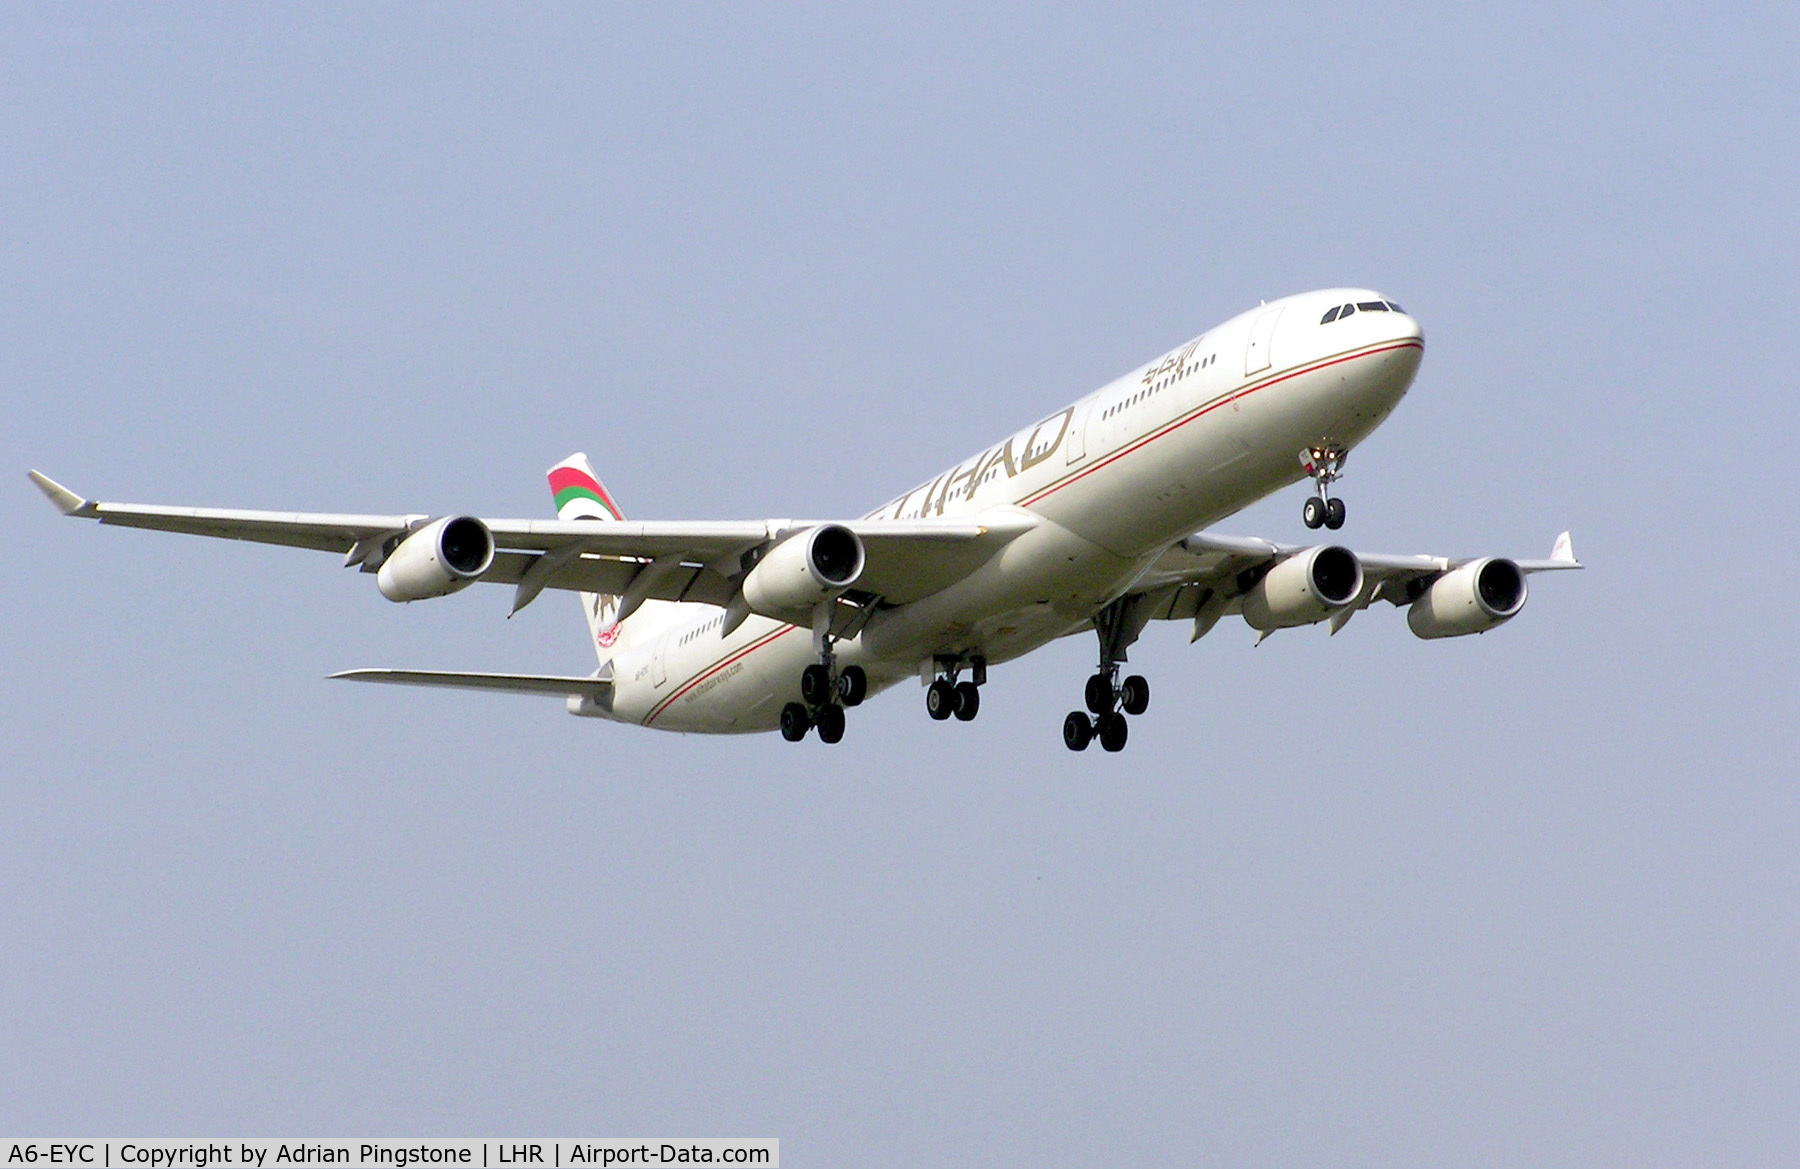 A6-EYC, 1995 Airbus A340-313 C/N 117, Etihad Airways Airbus A340-300 landing at London Heathrow Airport, England in Sept 2005